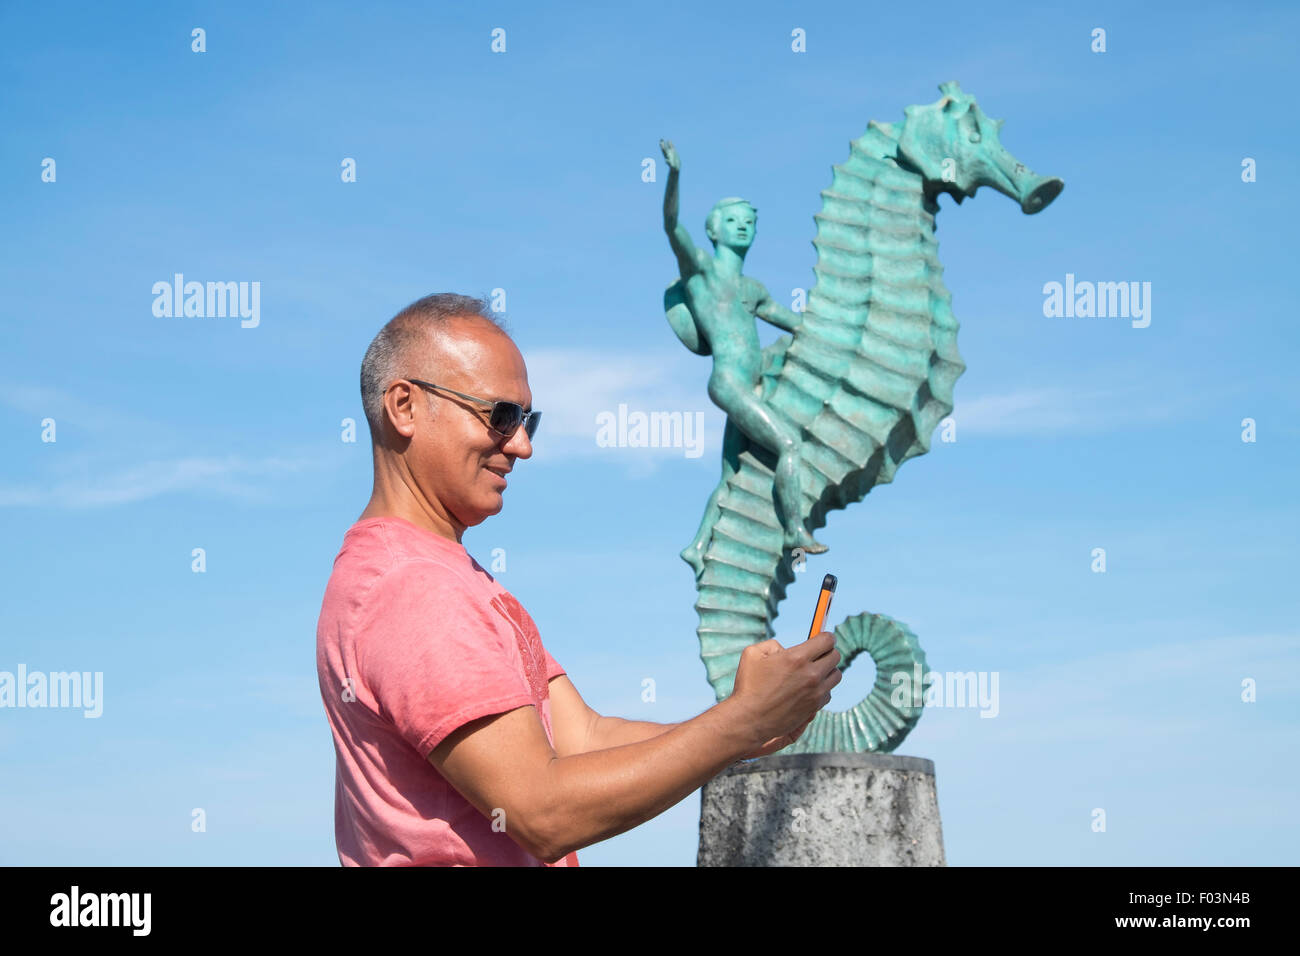 Tourist in Puerto Vallarta, Mexico. Man, 55 years old, hispanic ethnicity, taking selfie or checking hissmart phone. Stock Photo